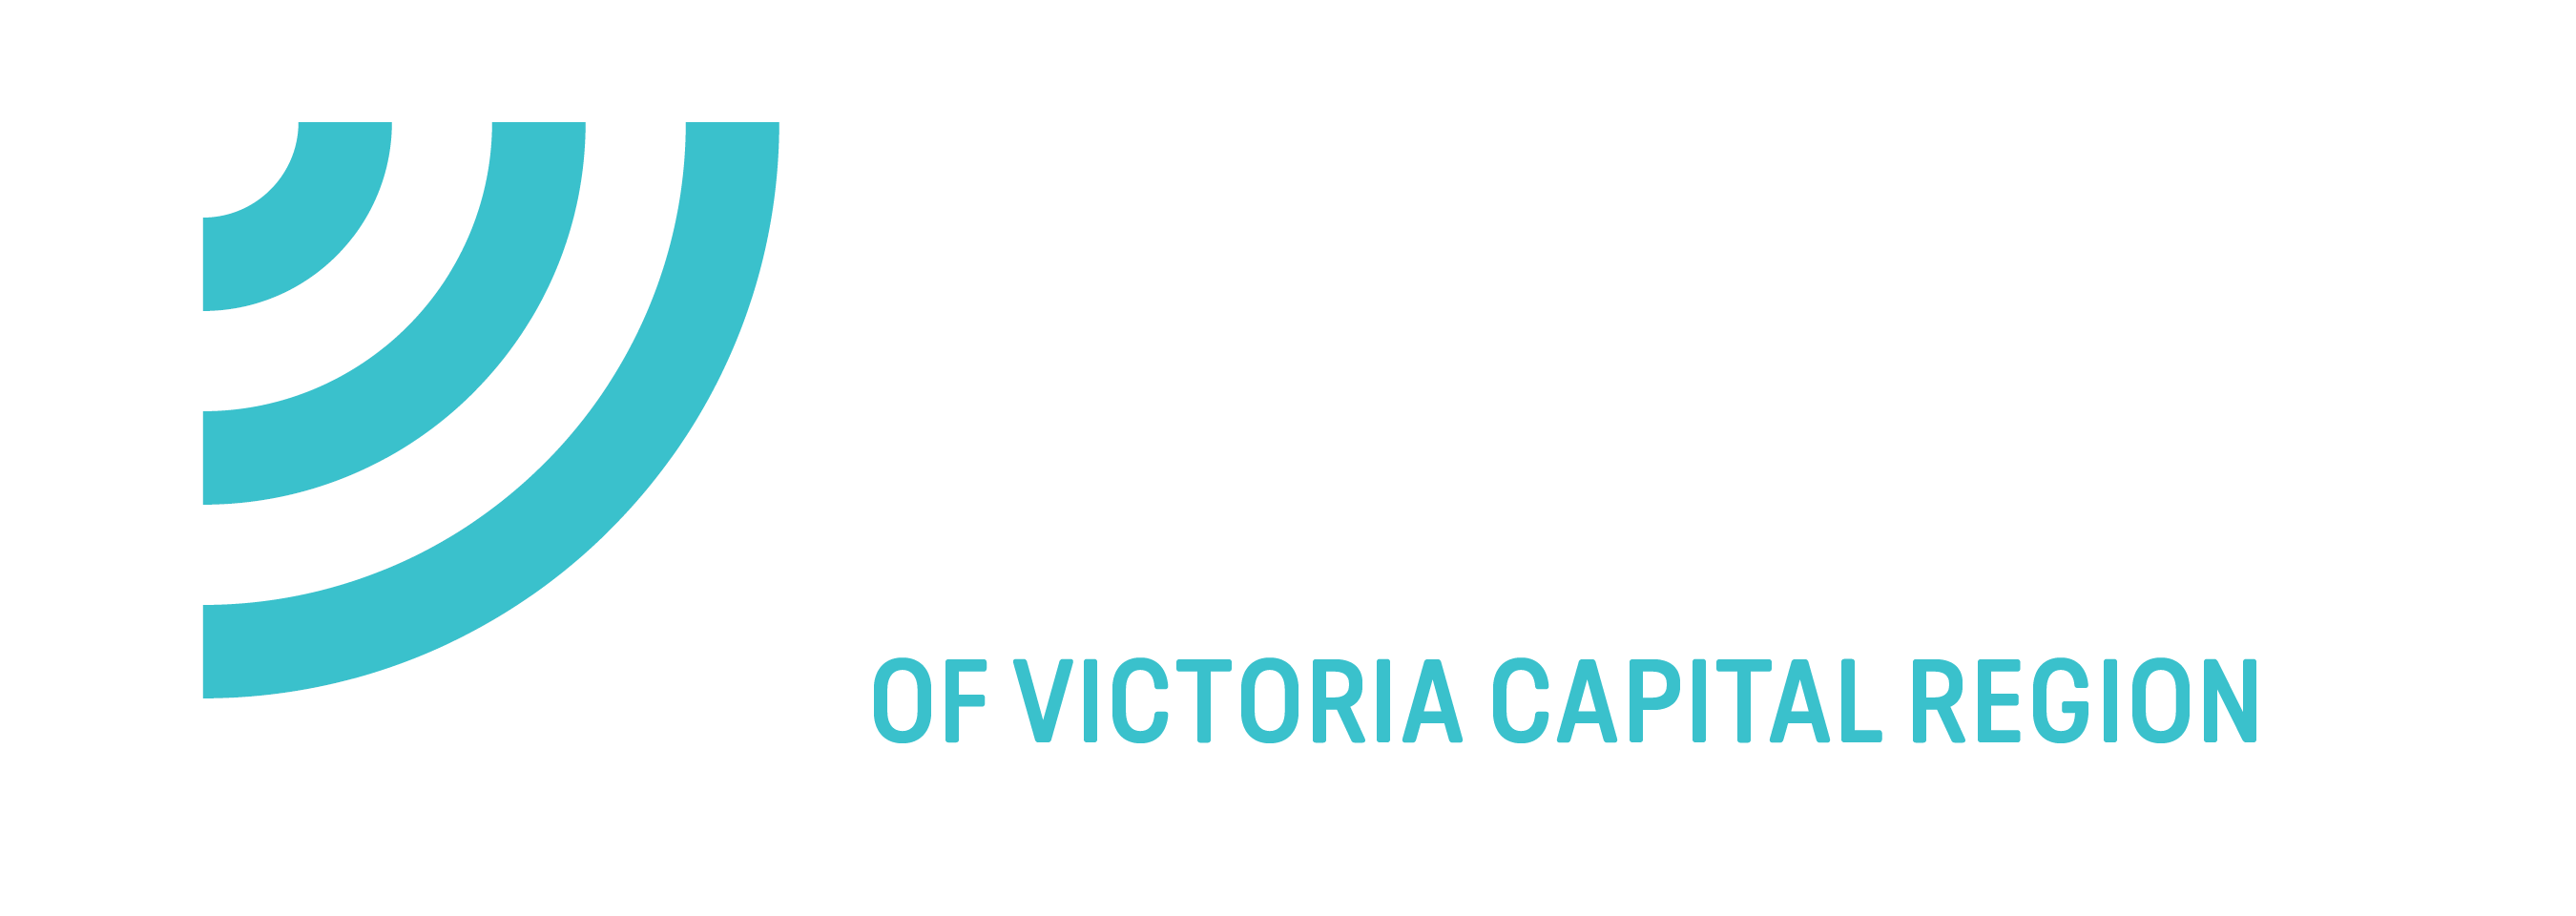 Thank you - Big Brothers Big Sisters of Victoria Capital Region